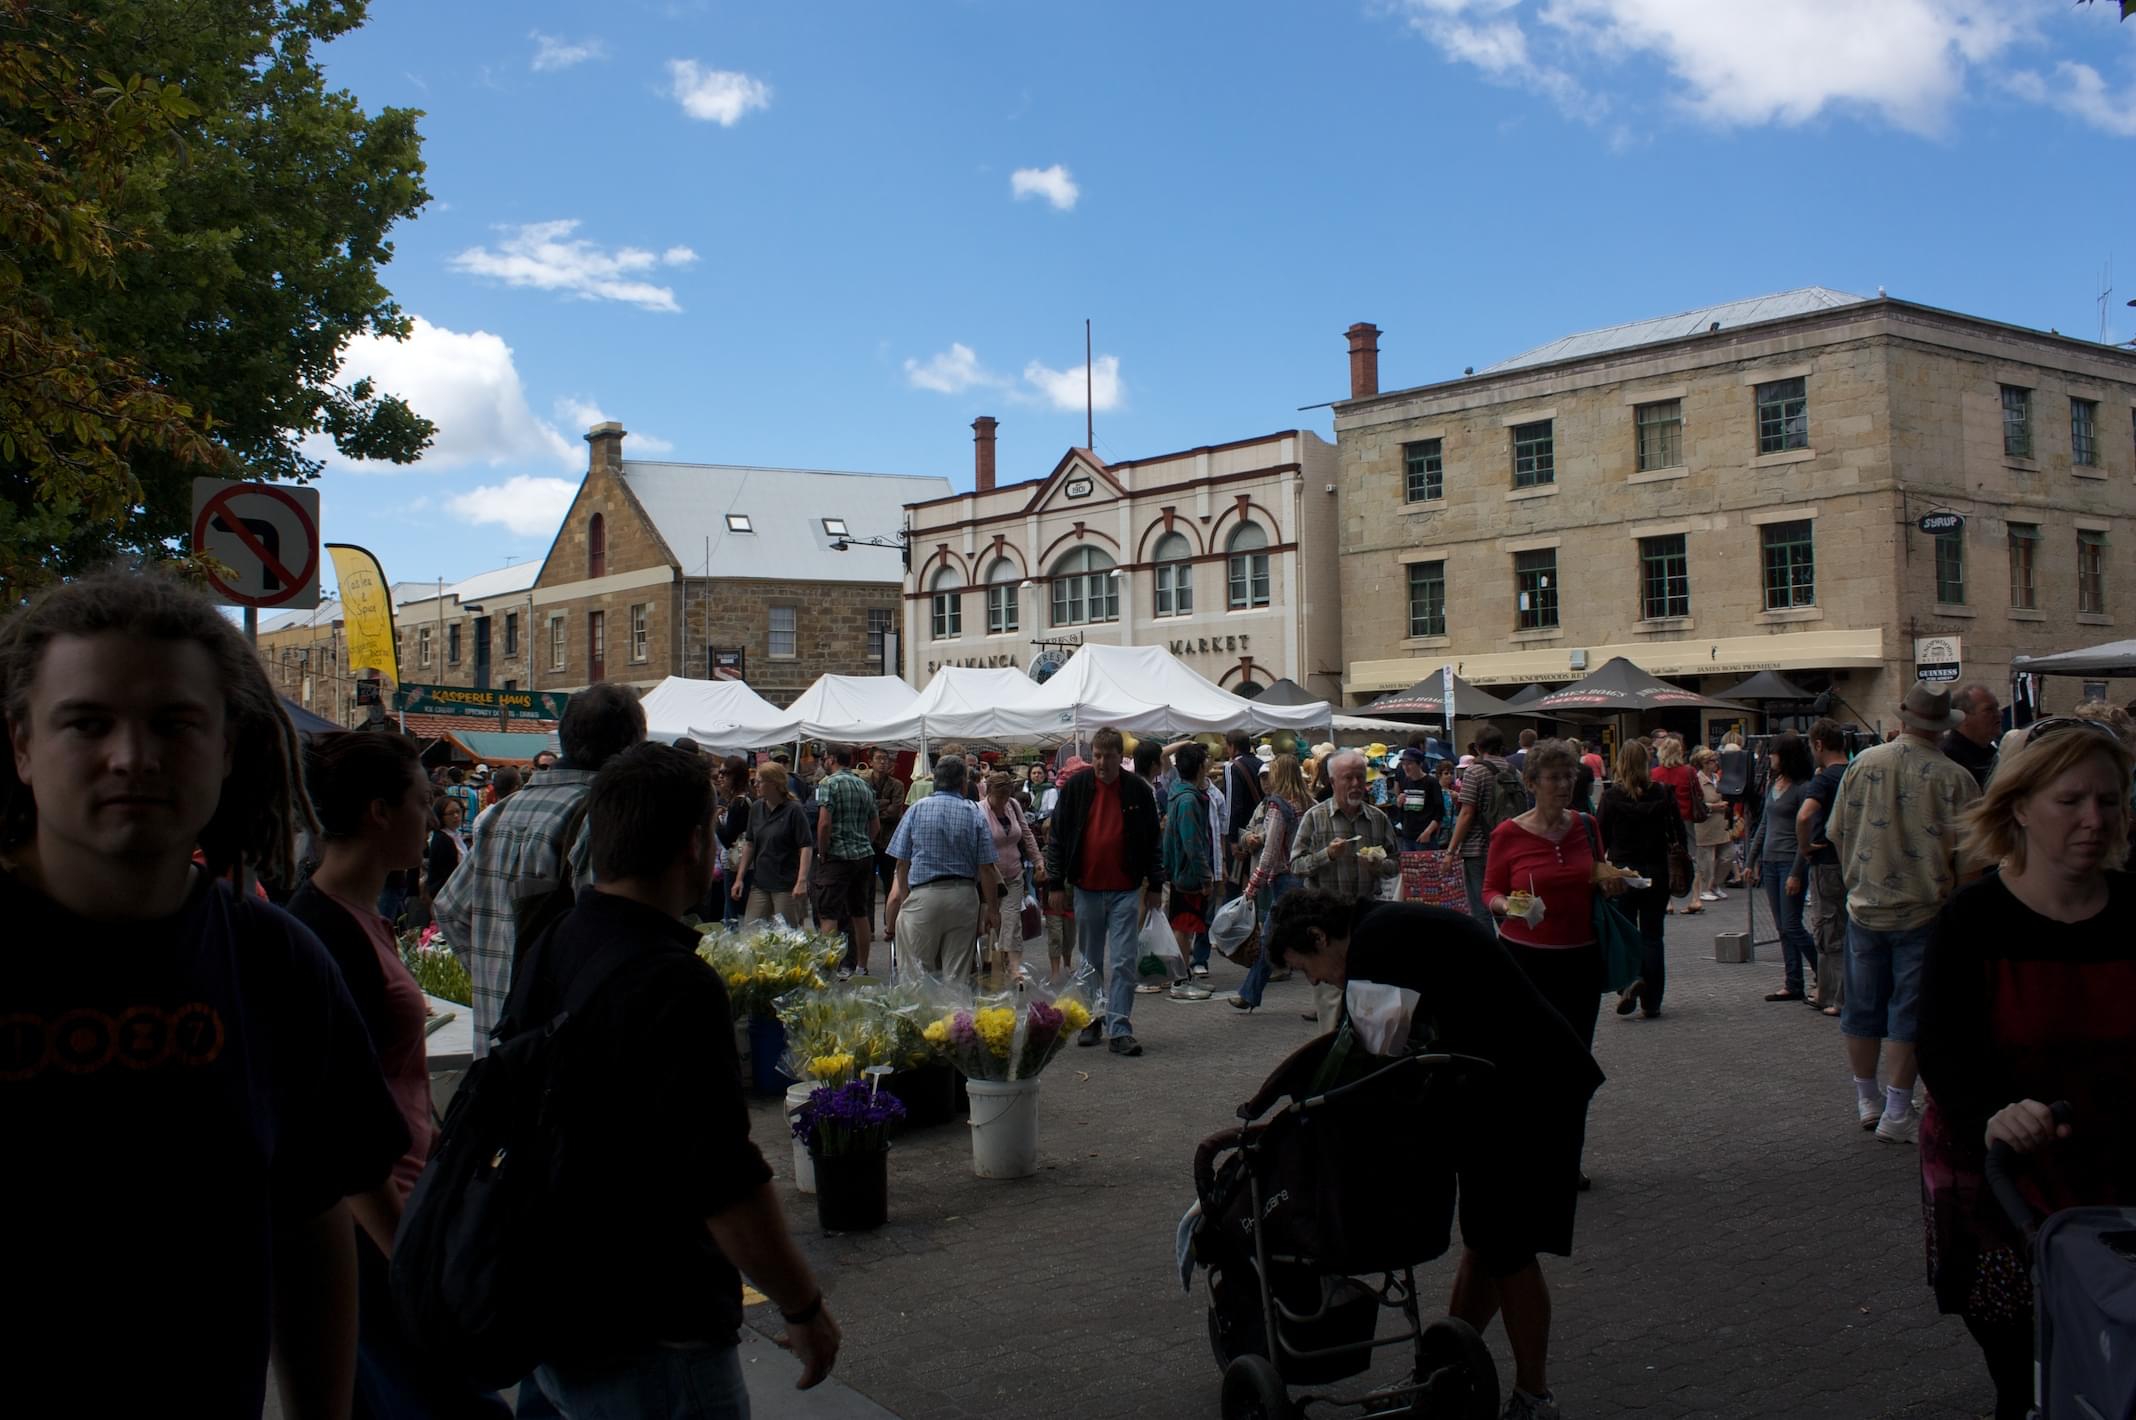 Salamanca Market Overview